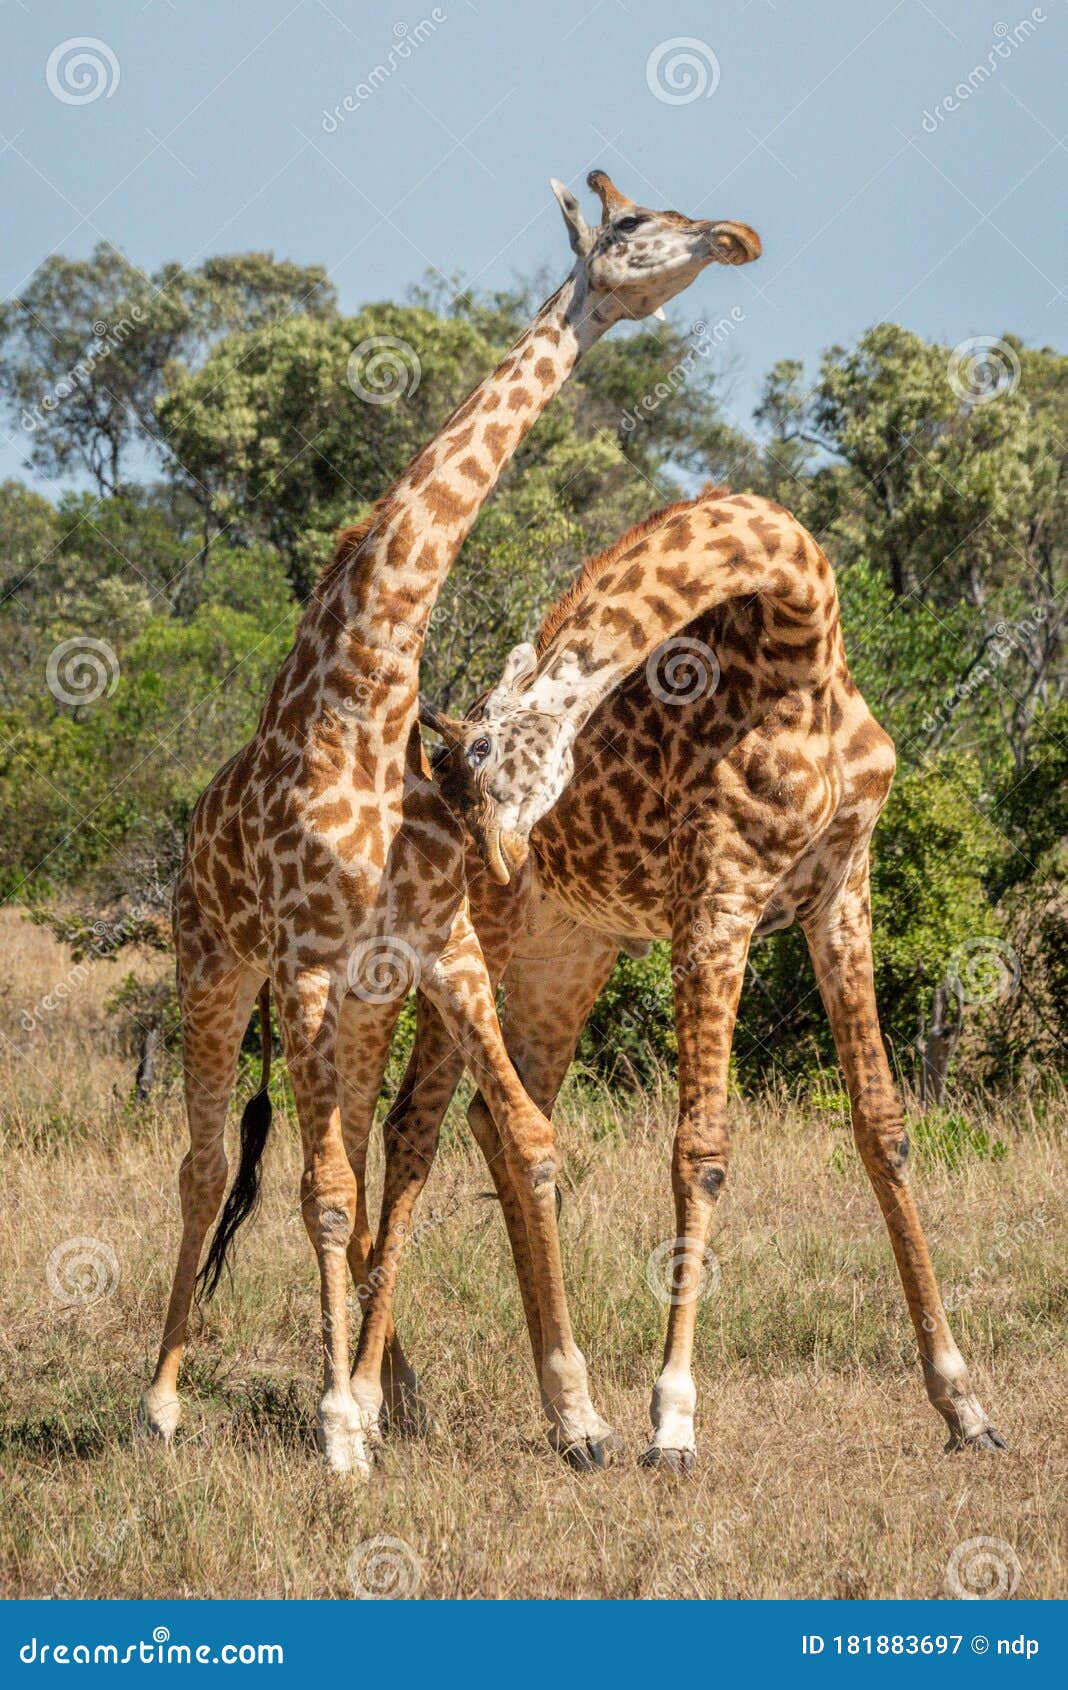 two masai giraffe stand necking near trees